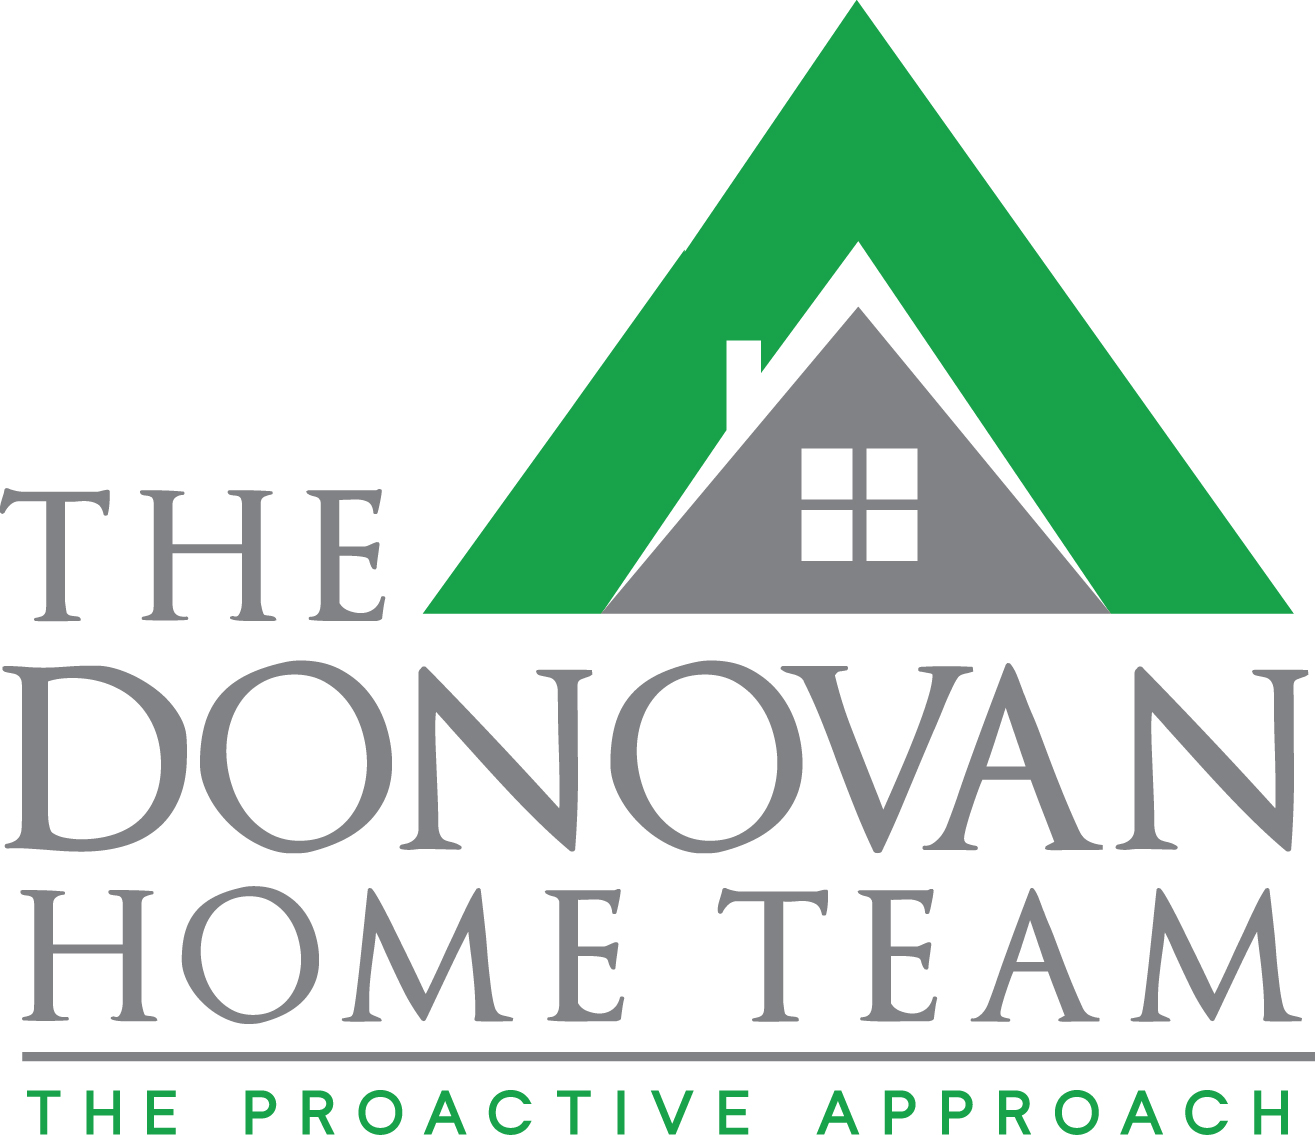 Donovan Team logo.jpg